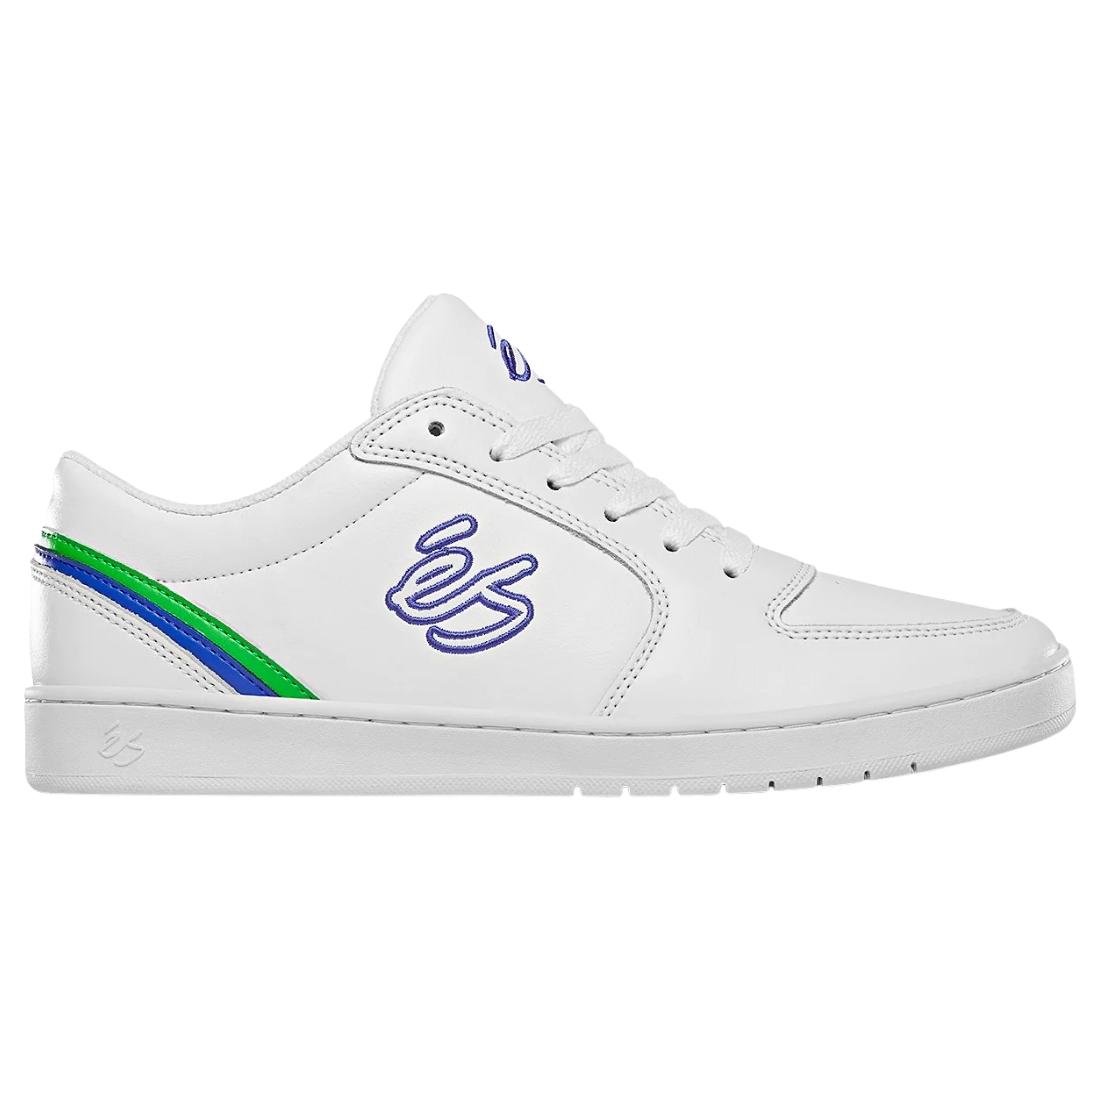 Es Eos Skate Shoes - White Blue Green - Mens Skate Shoes by eS